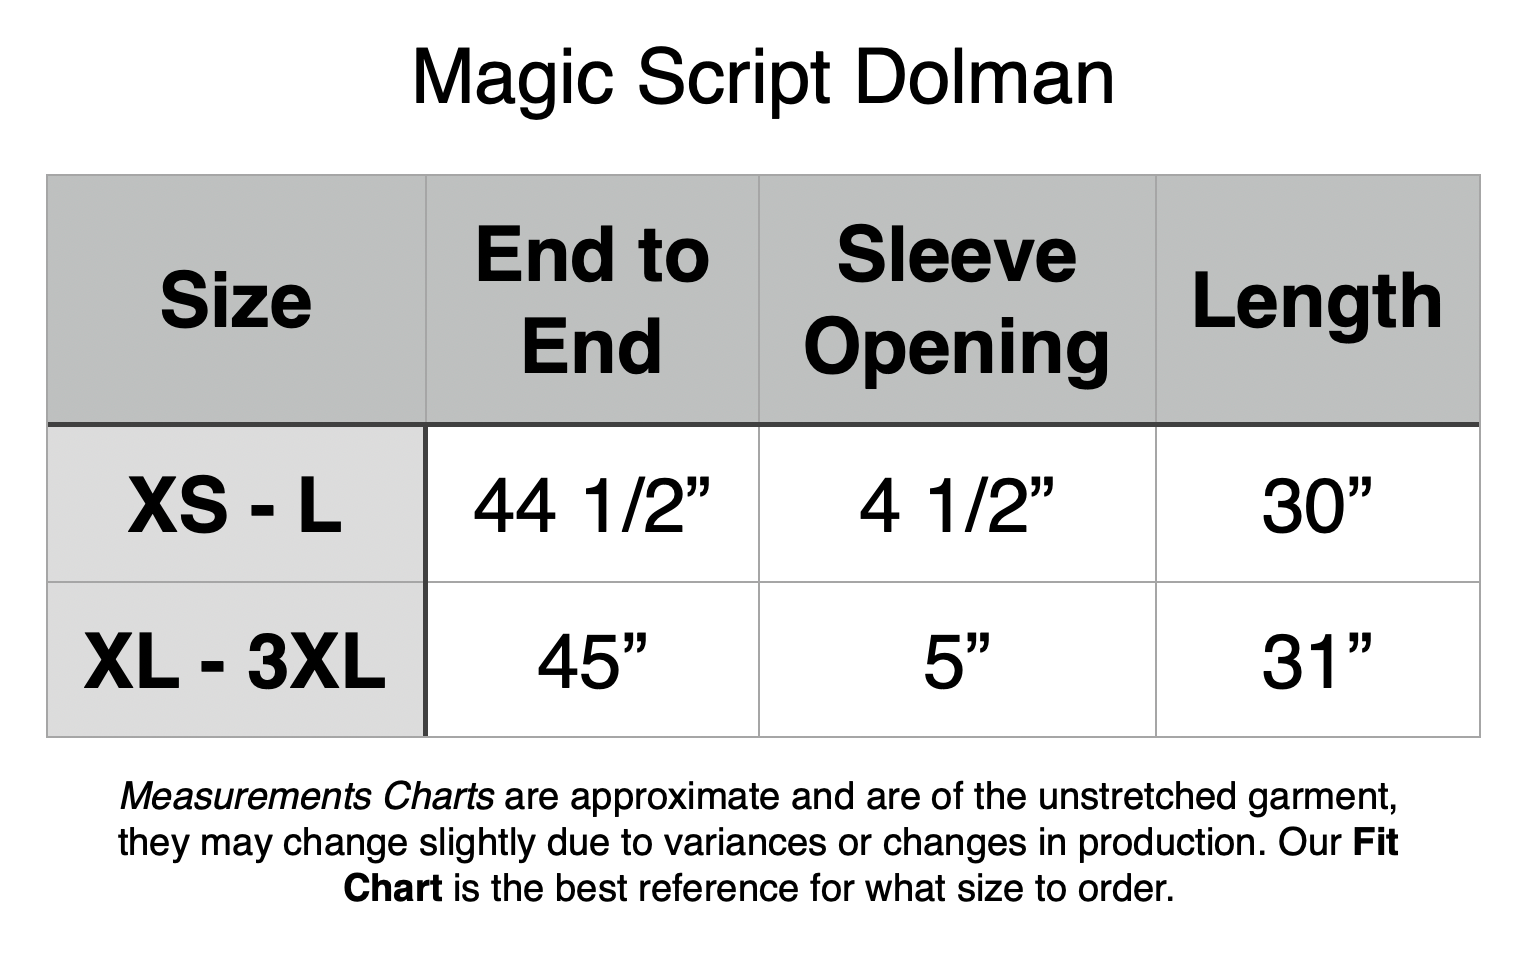 Magic Script Dolman: XS - L: 44.5" Width, 30" Length, 4.5" Sleeve Opening. XL - 3XL: 45" Width, 31" Length, 5" Sleeve Opening.